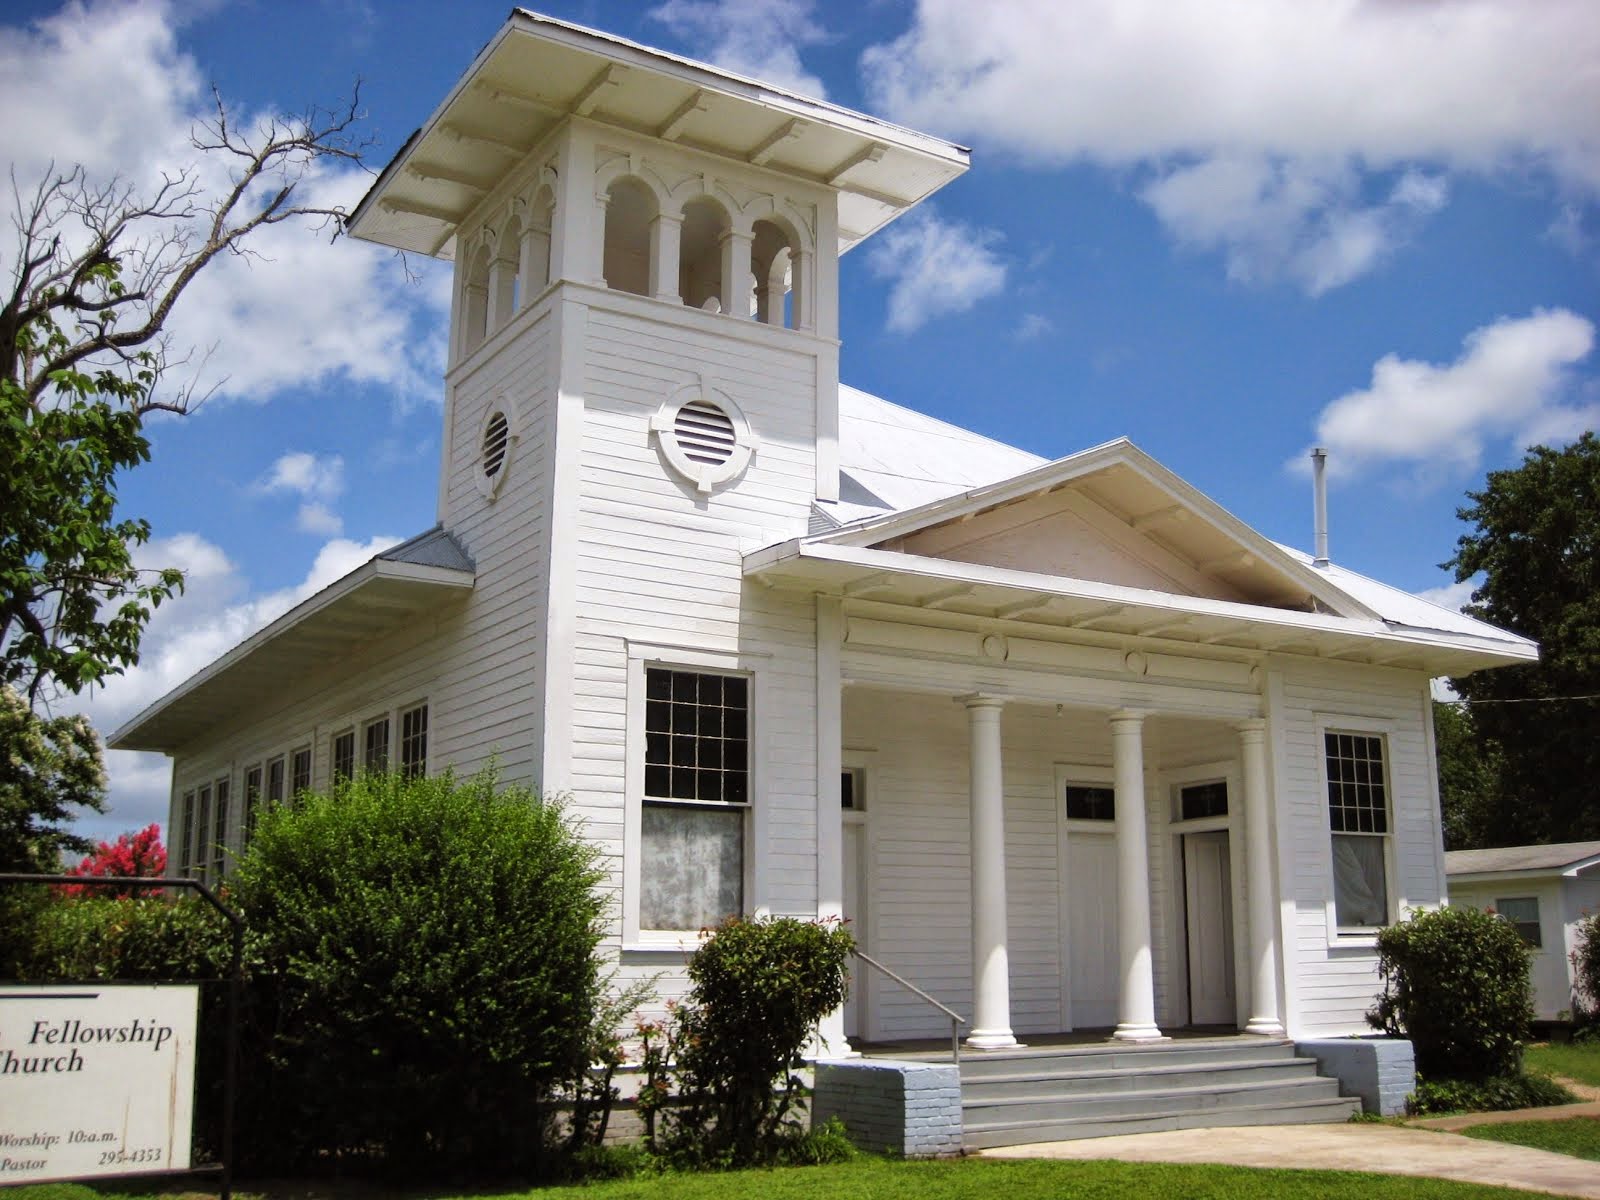 Mission Fellowship Church Buda, TX